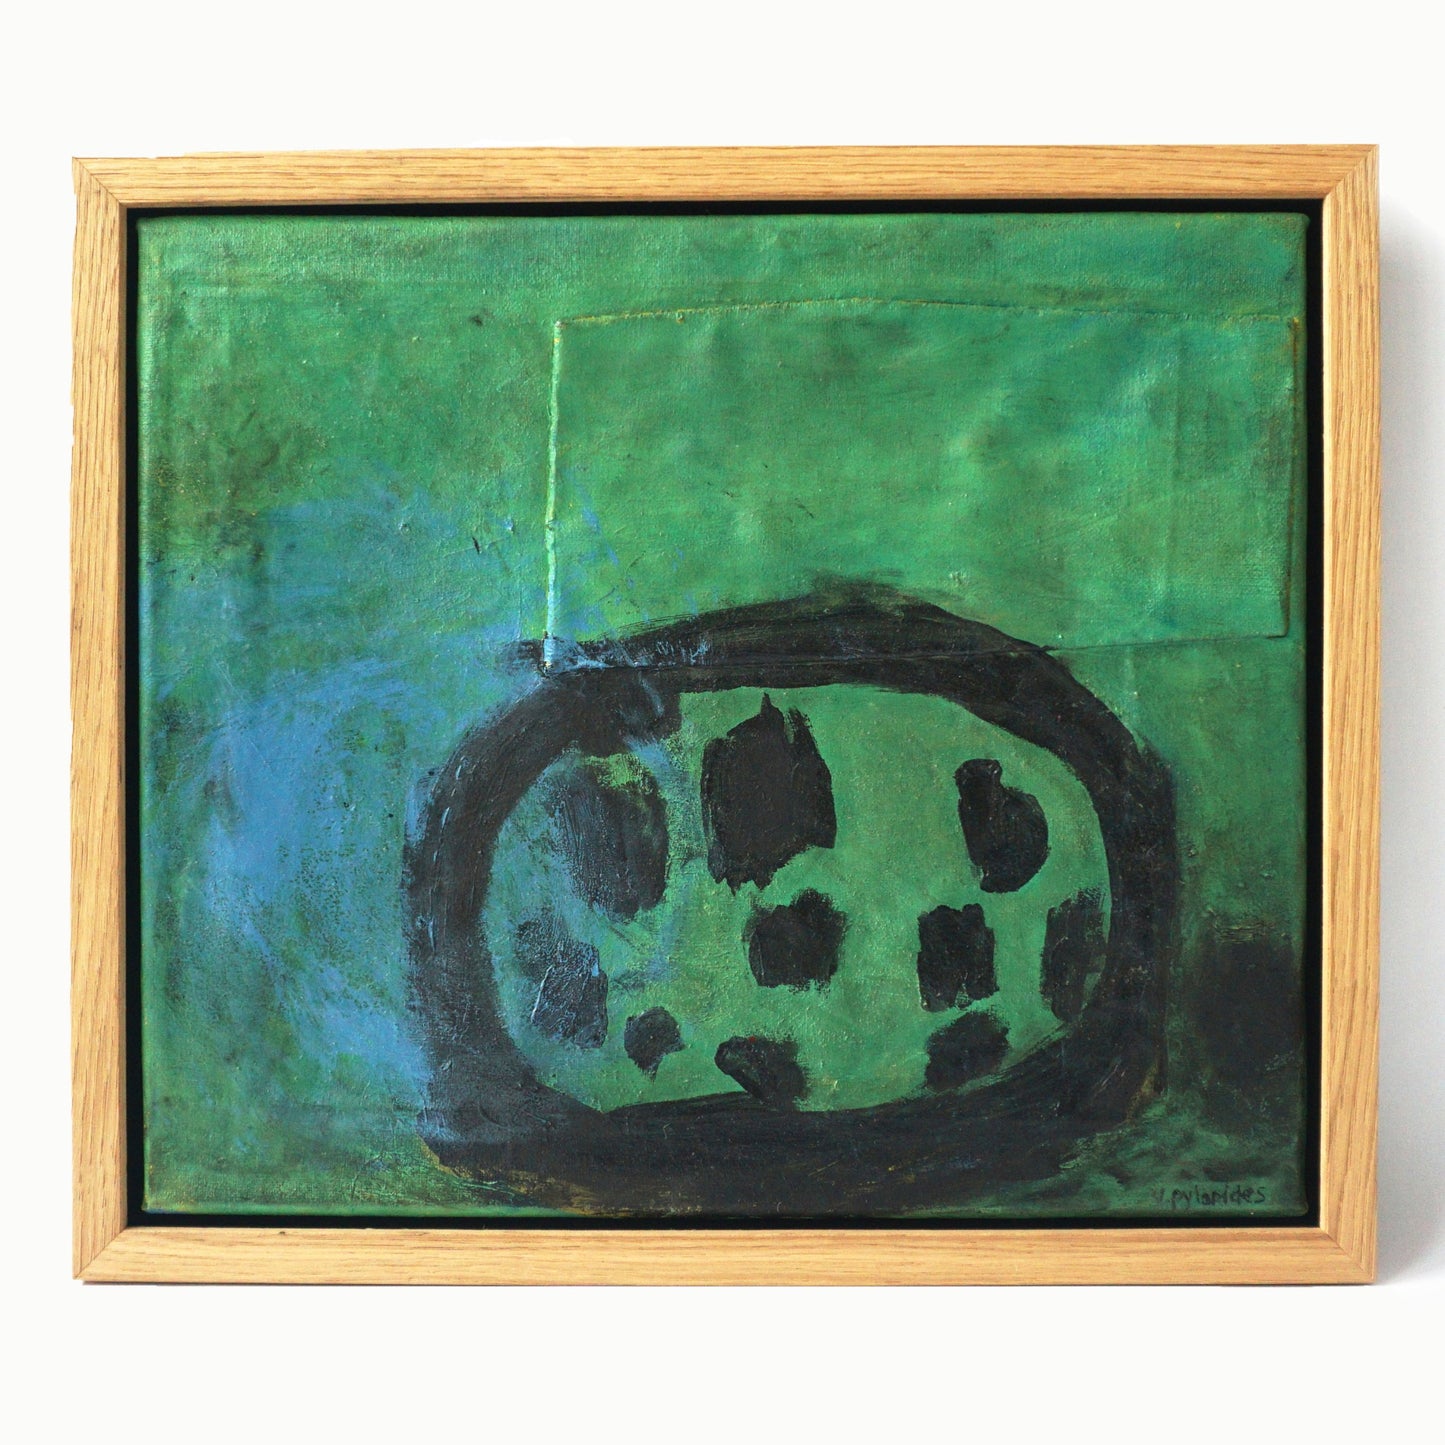 "Green & Black", oil painting & appliqués